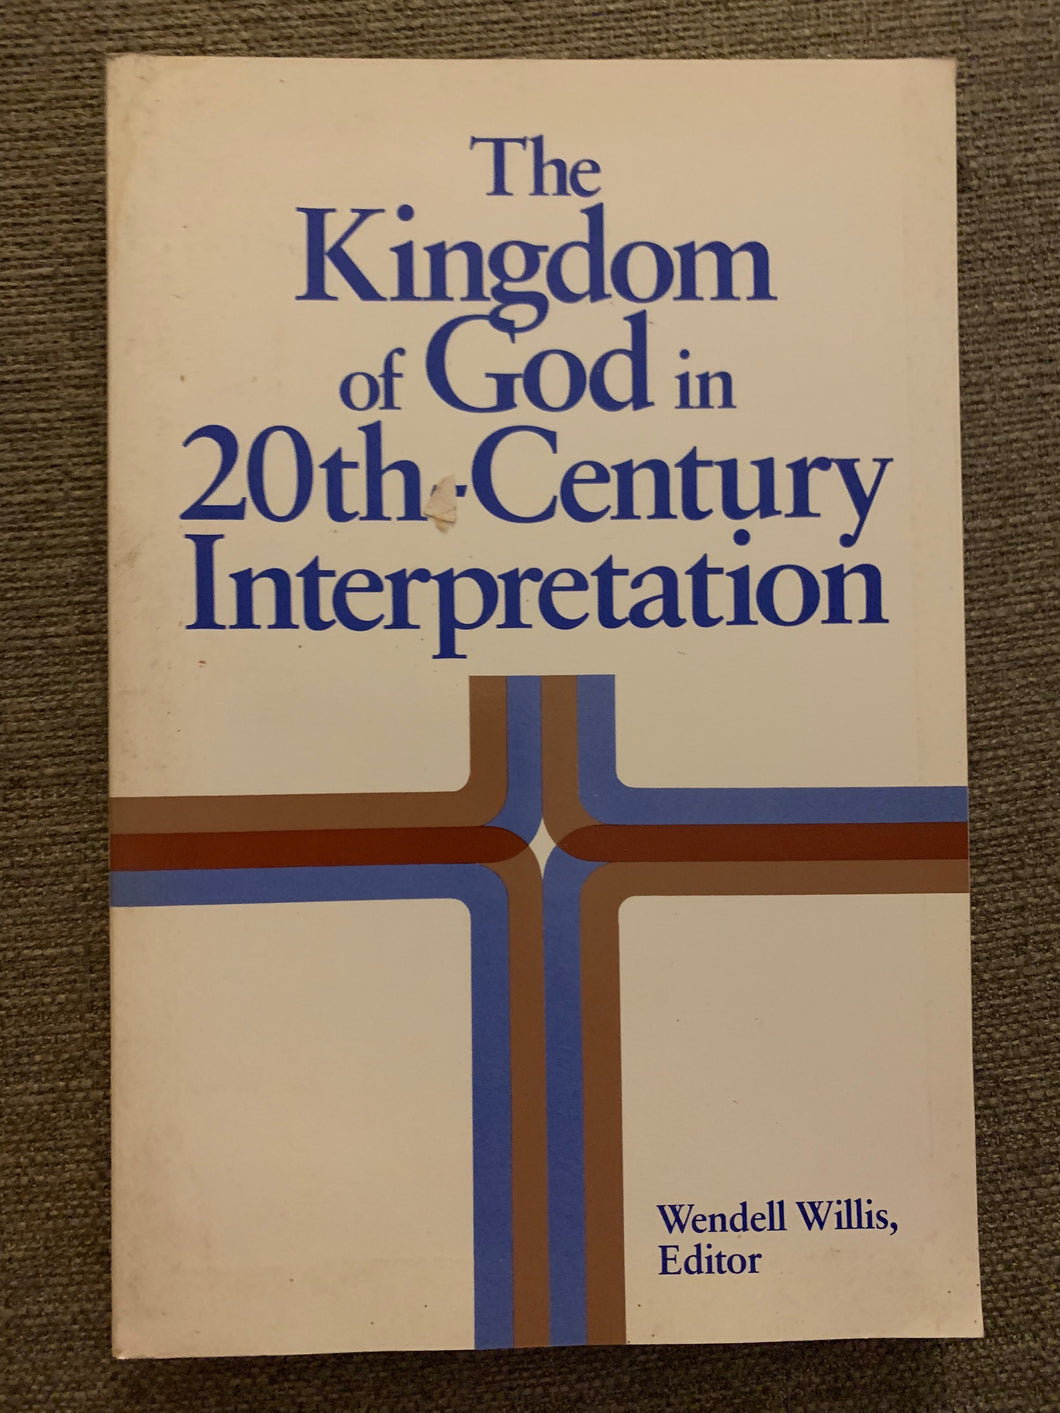 The Kingdom of God in 20th Century Interpretation by Wendell Willis